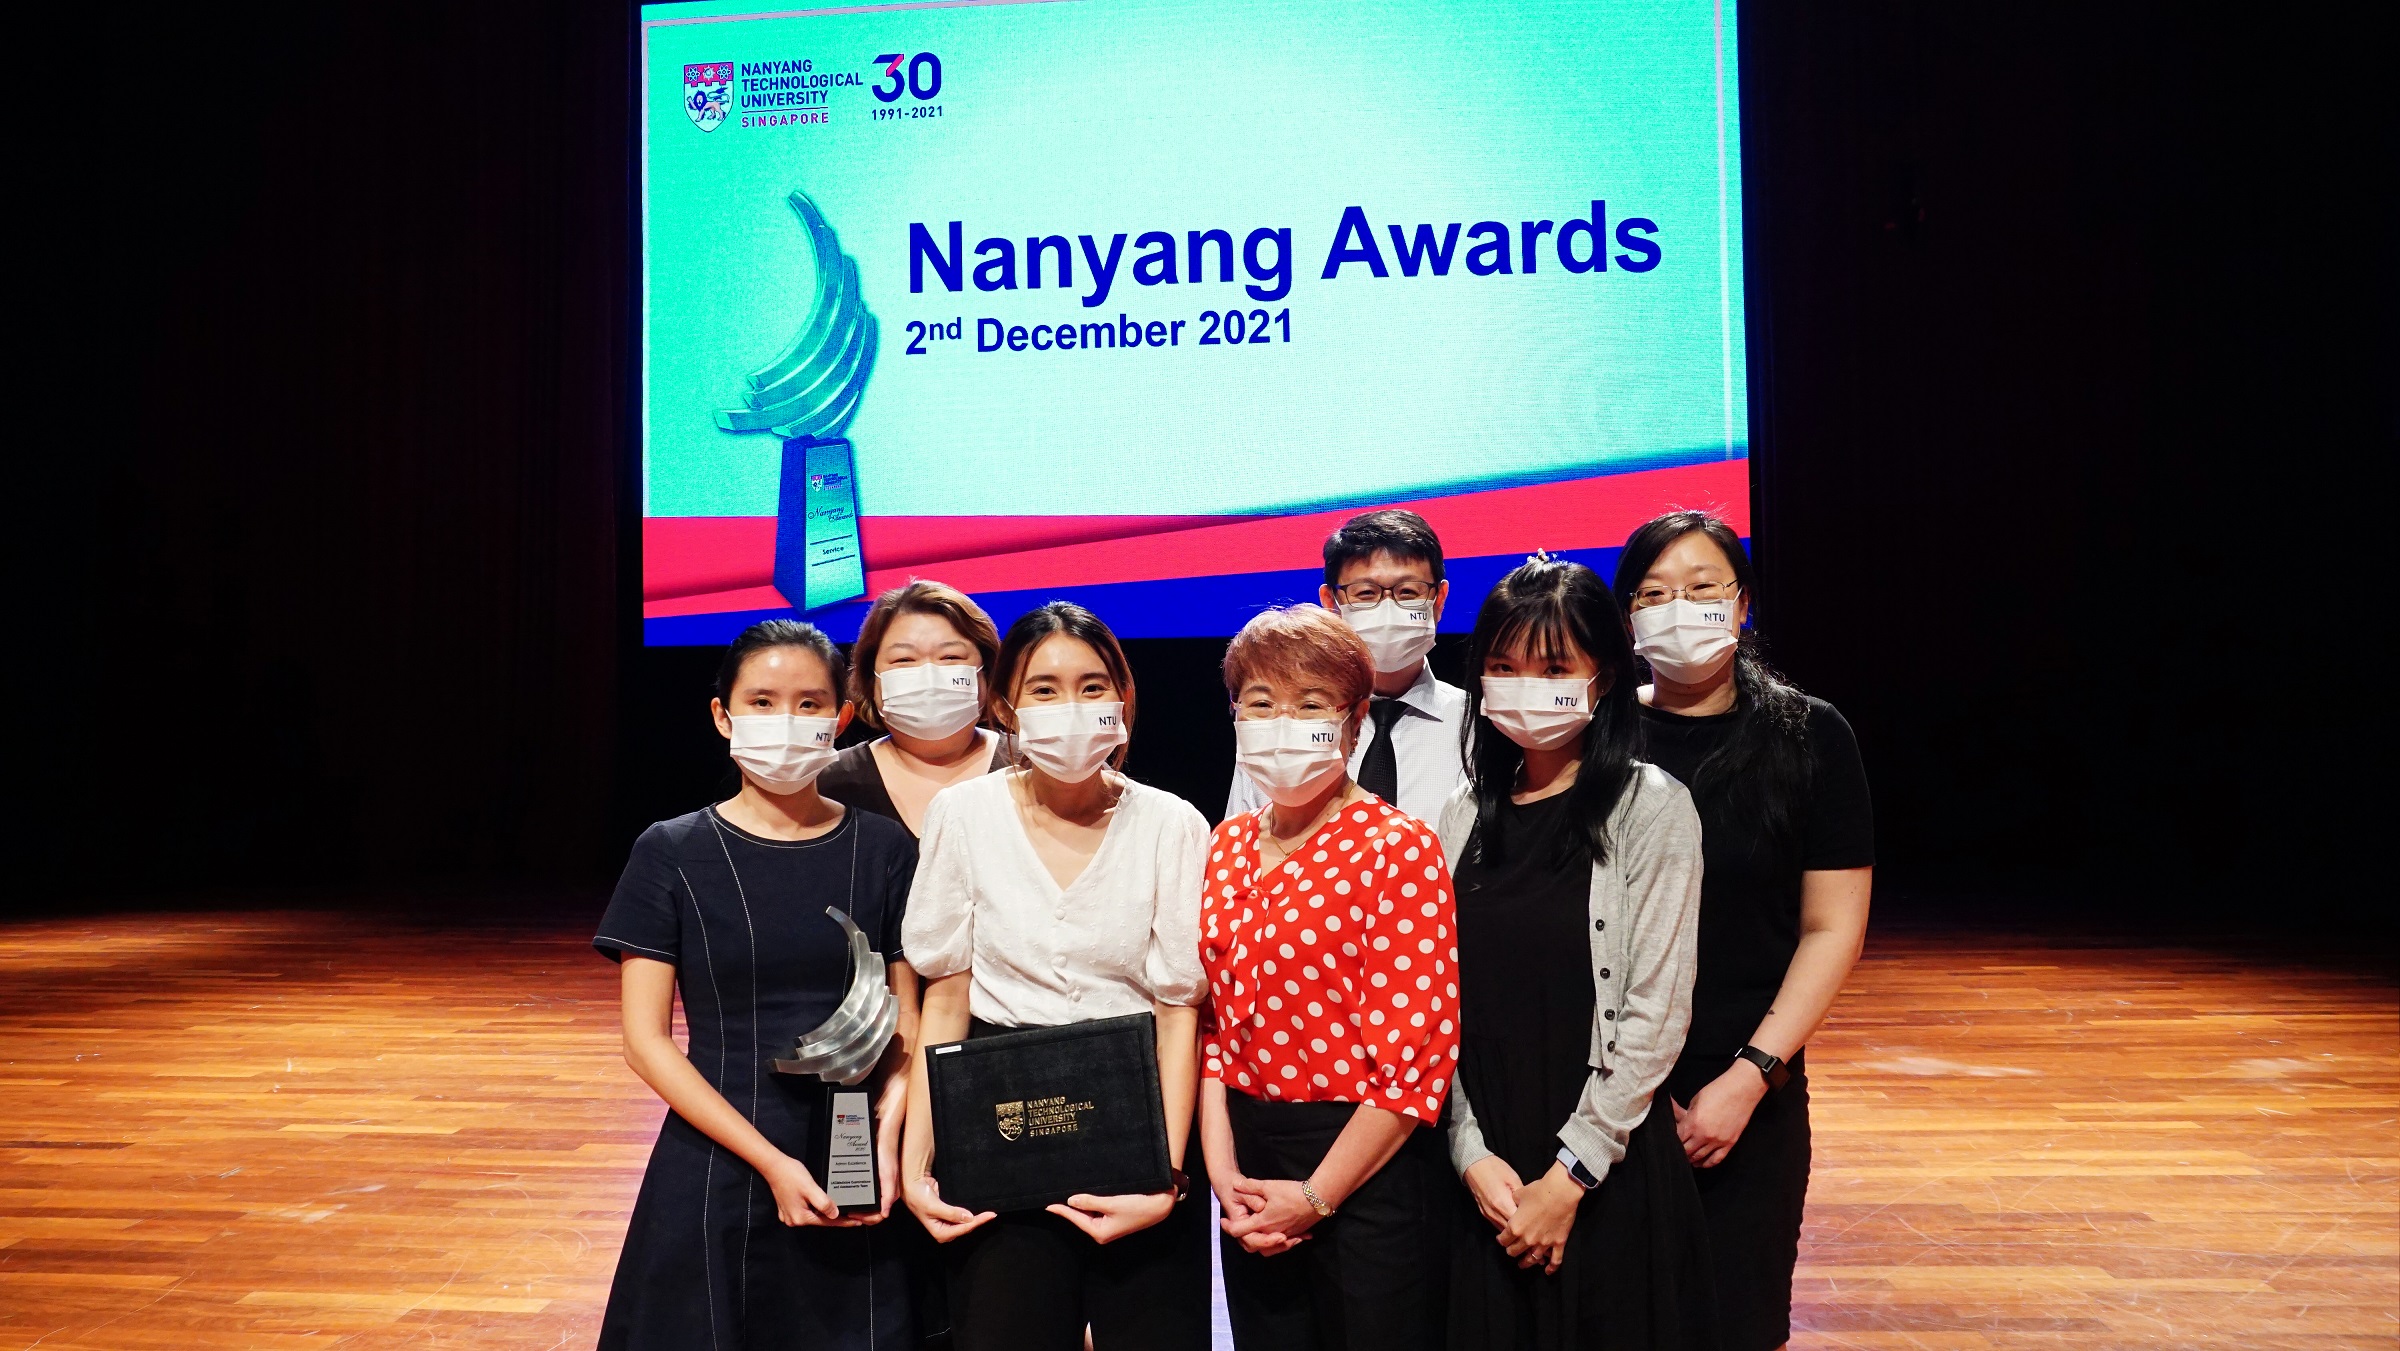 LKCMedicine's Outstanding achievements at Nanyang Awards 2021